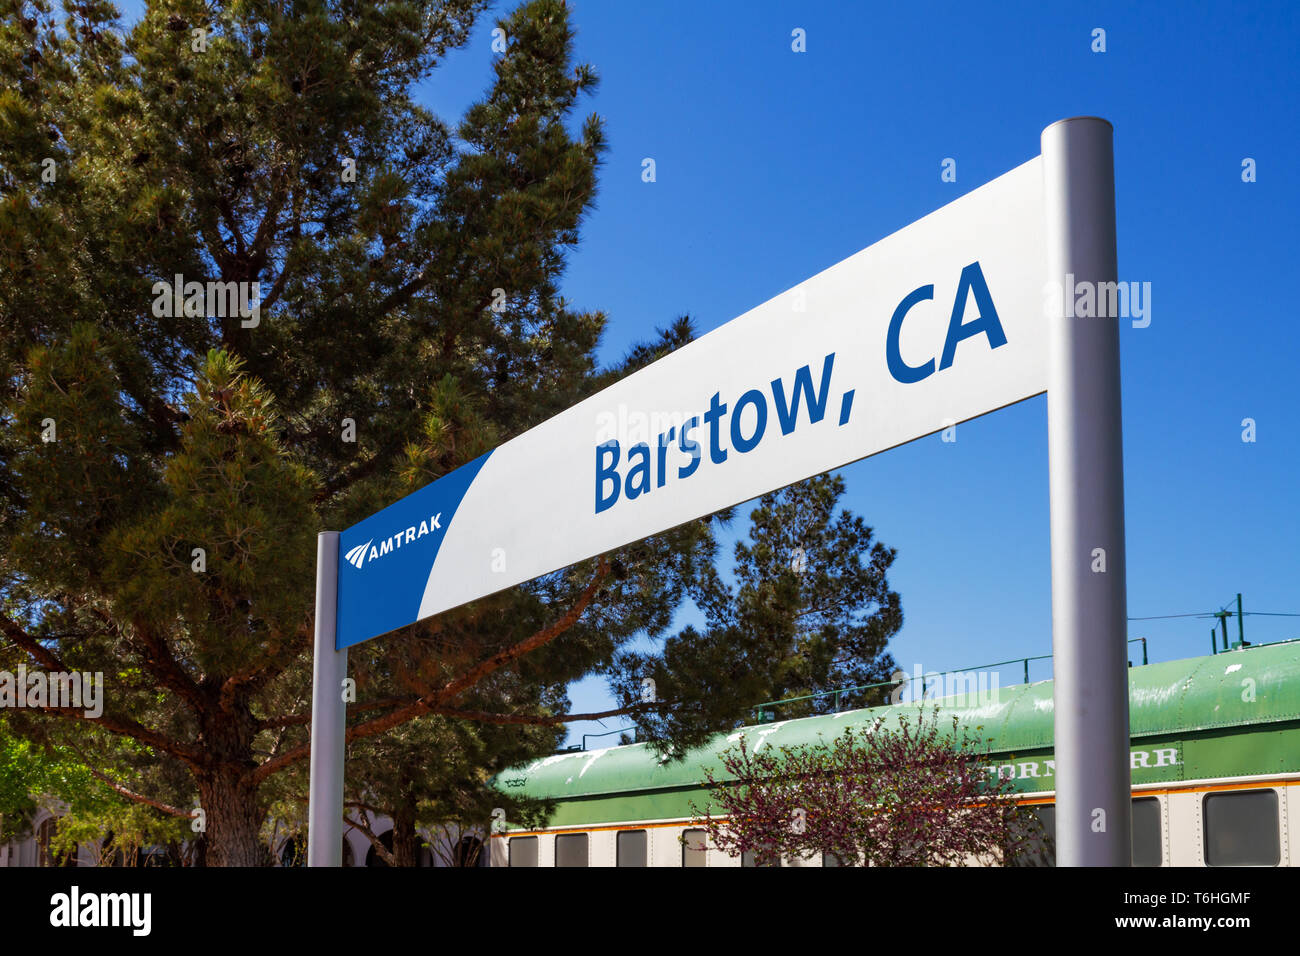 Barstow, CA/USA - April 14, 2019: Amtrak Lage in Barstow, Kalifornien an der berühmten Barstow Harvey Haus in 685 North 1st Ave. Stockfoto